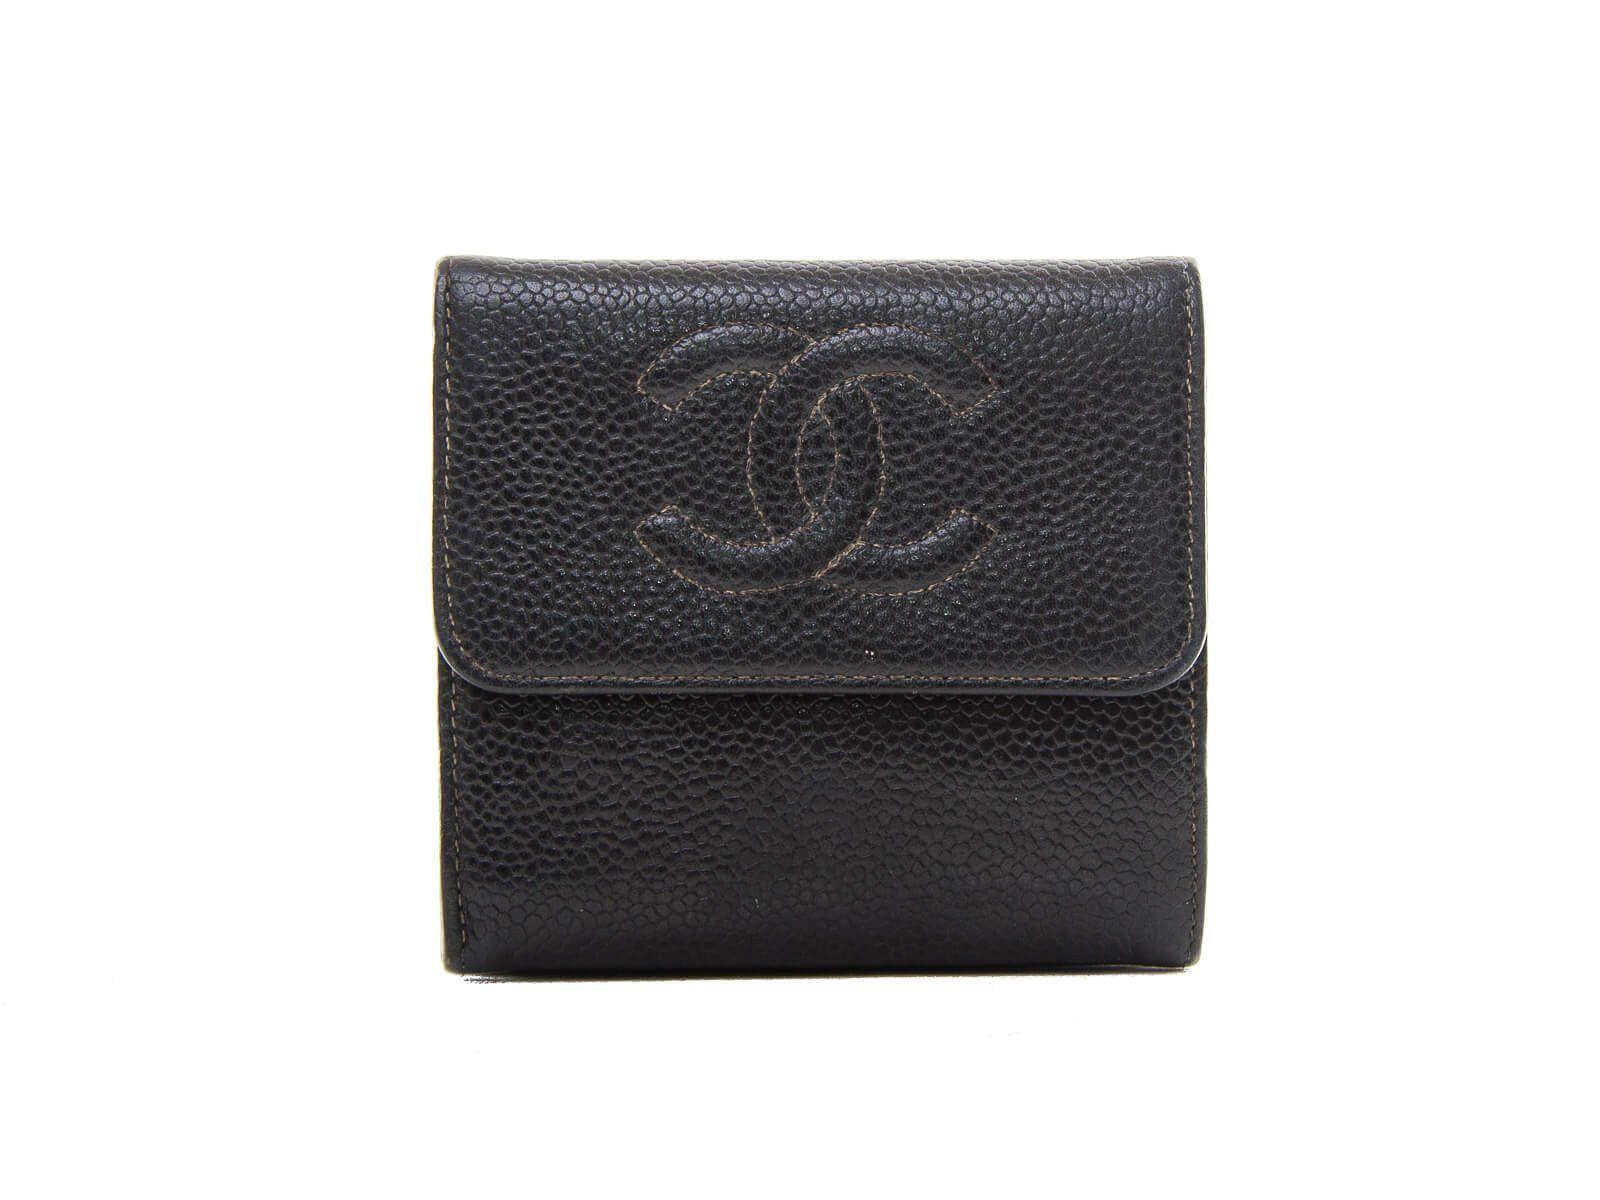 Chanel CC Logo - Authentic Chanel CC Logo Black Caviar Leather Tri Fold Wallet